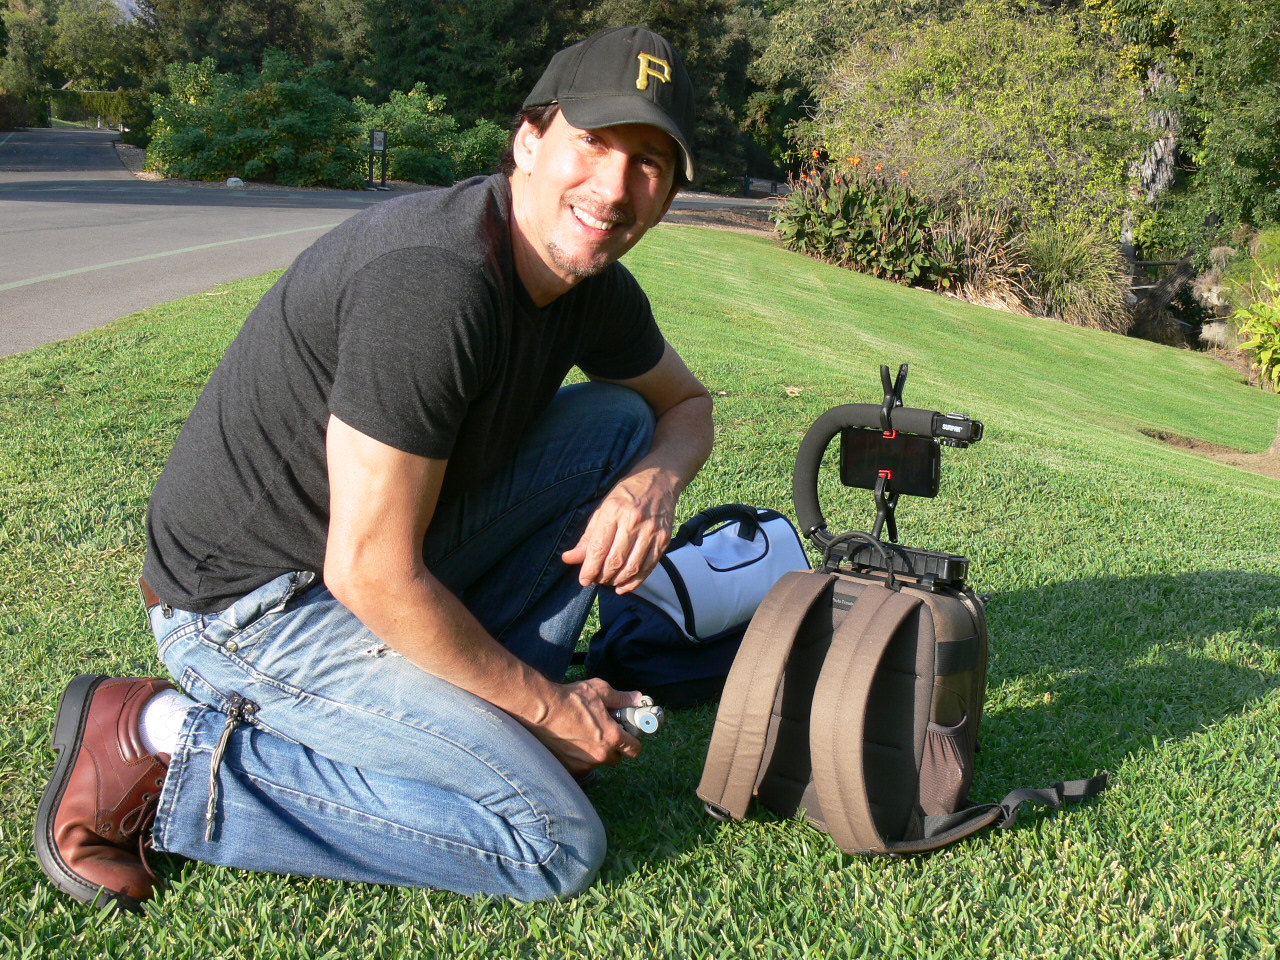 Director Robert Mann on set of the 2014 Motorola Moto X film project.